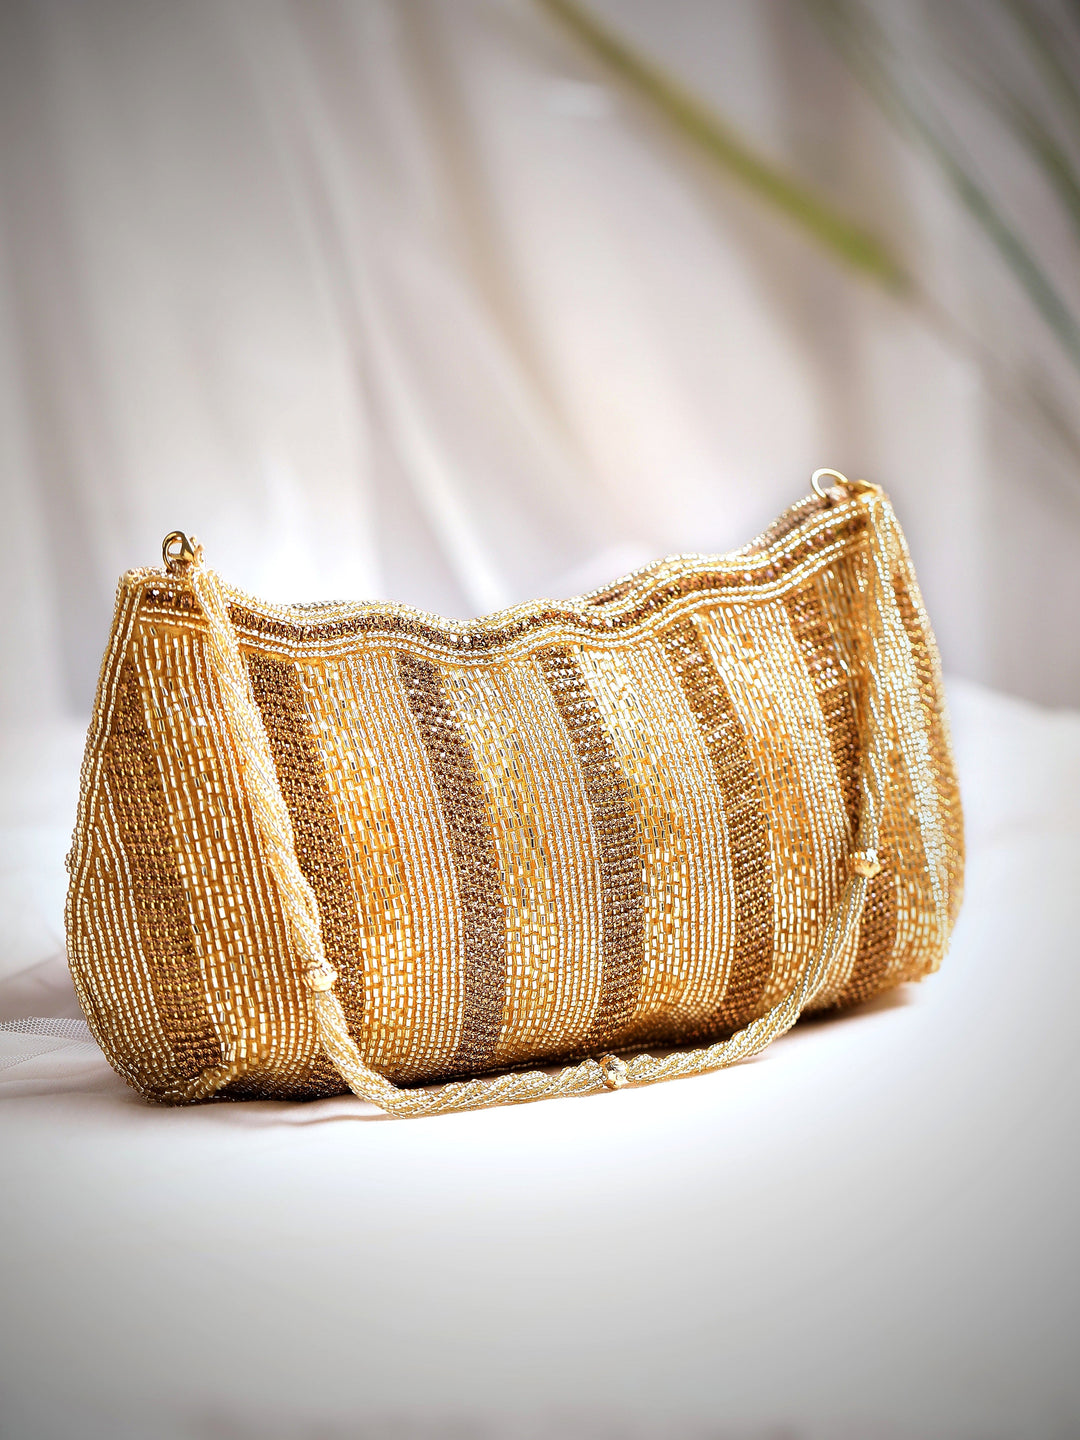 Rubans Cream And Golden Colour HandBag With Golden Embroided Design. Handbag & Wallet Accessories